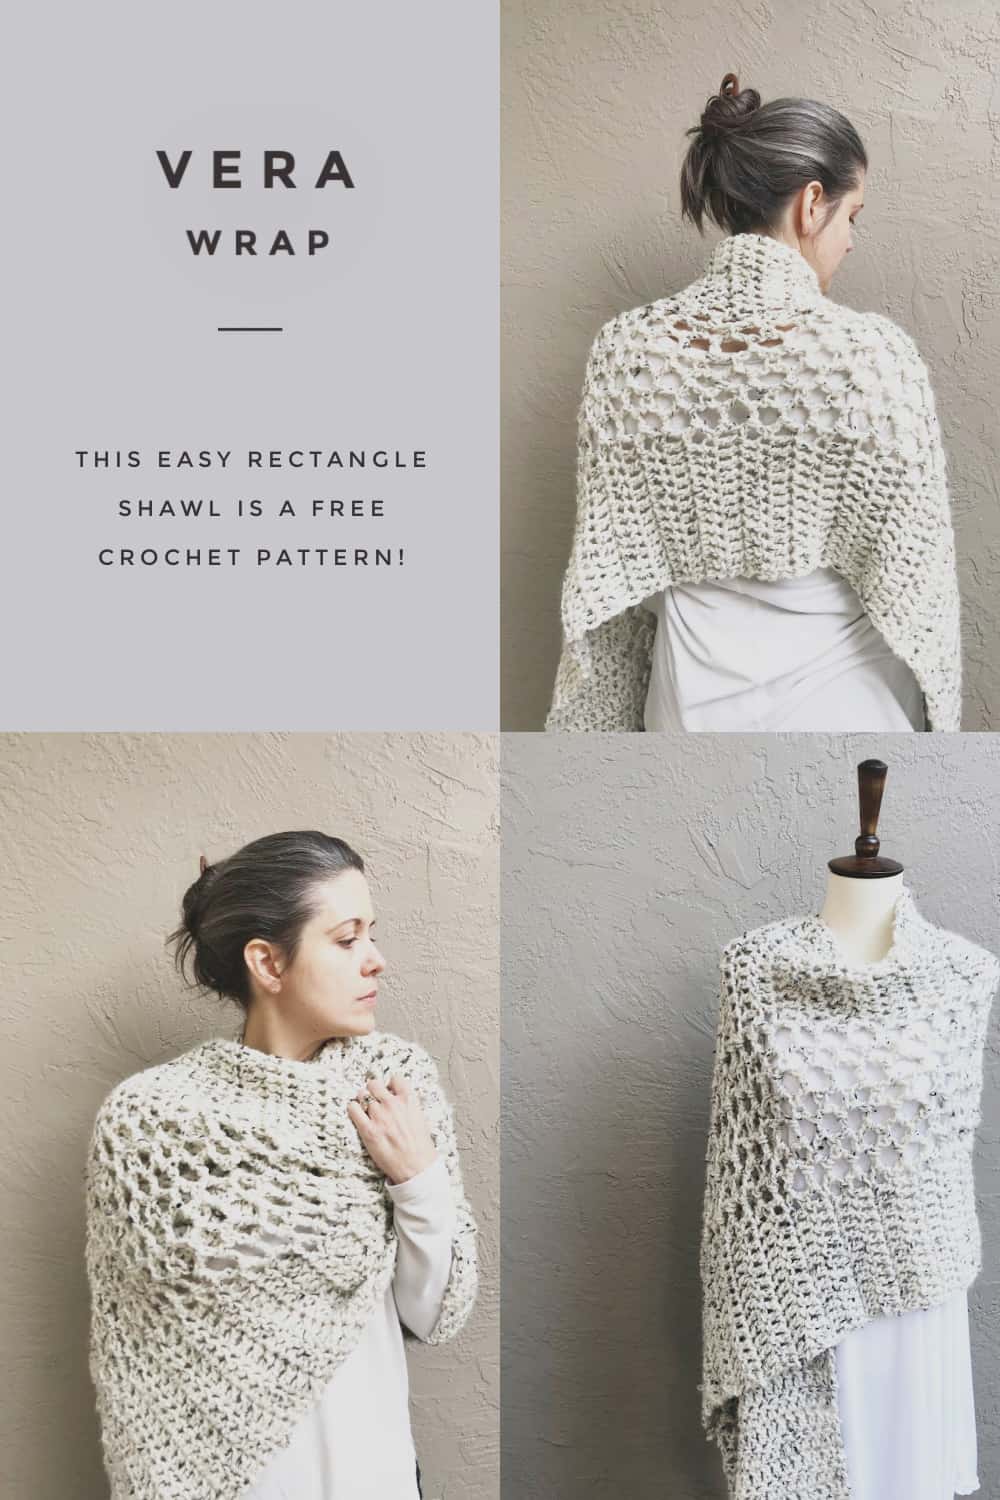 PIN IMAGE of easy rectangular crochet shawl pattern free!